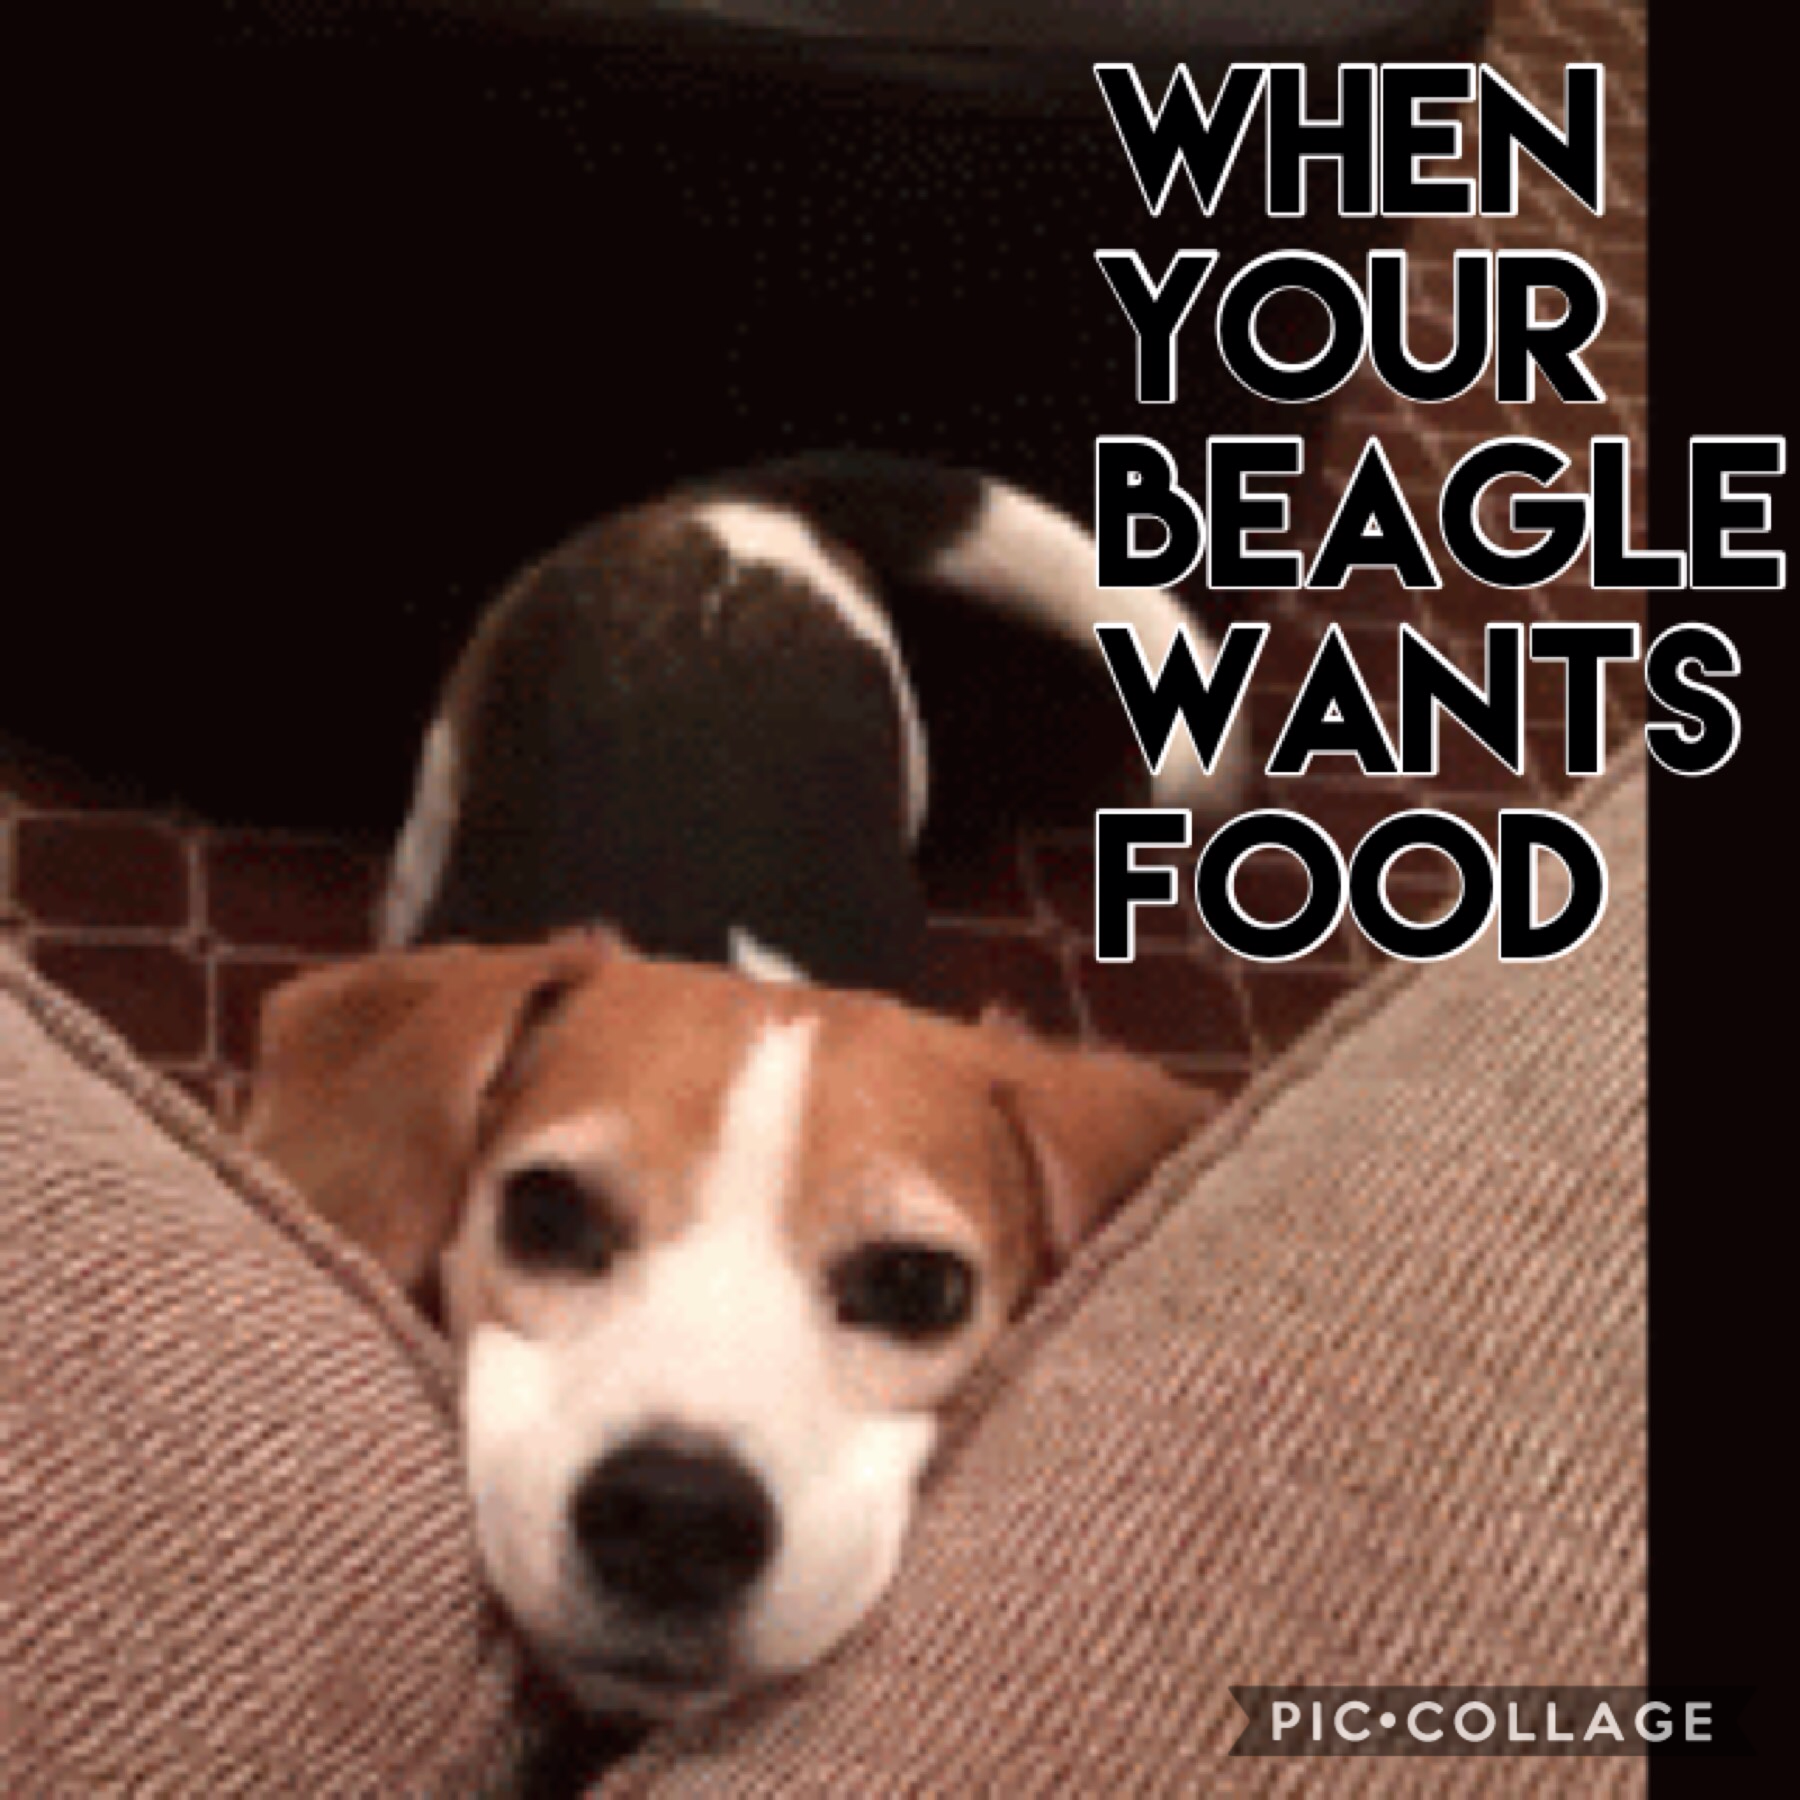 I love beagles! I have one